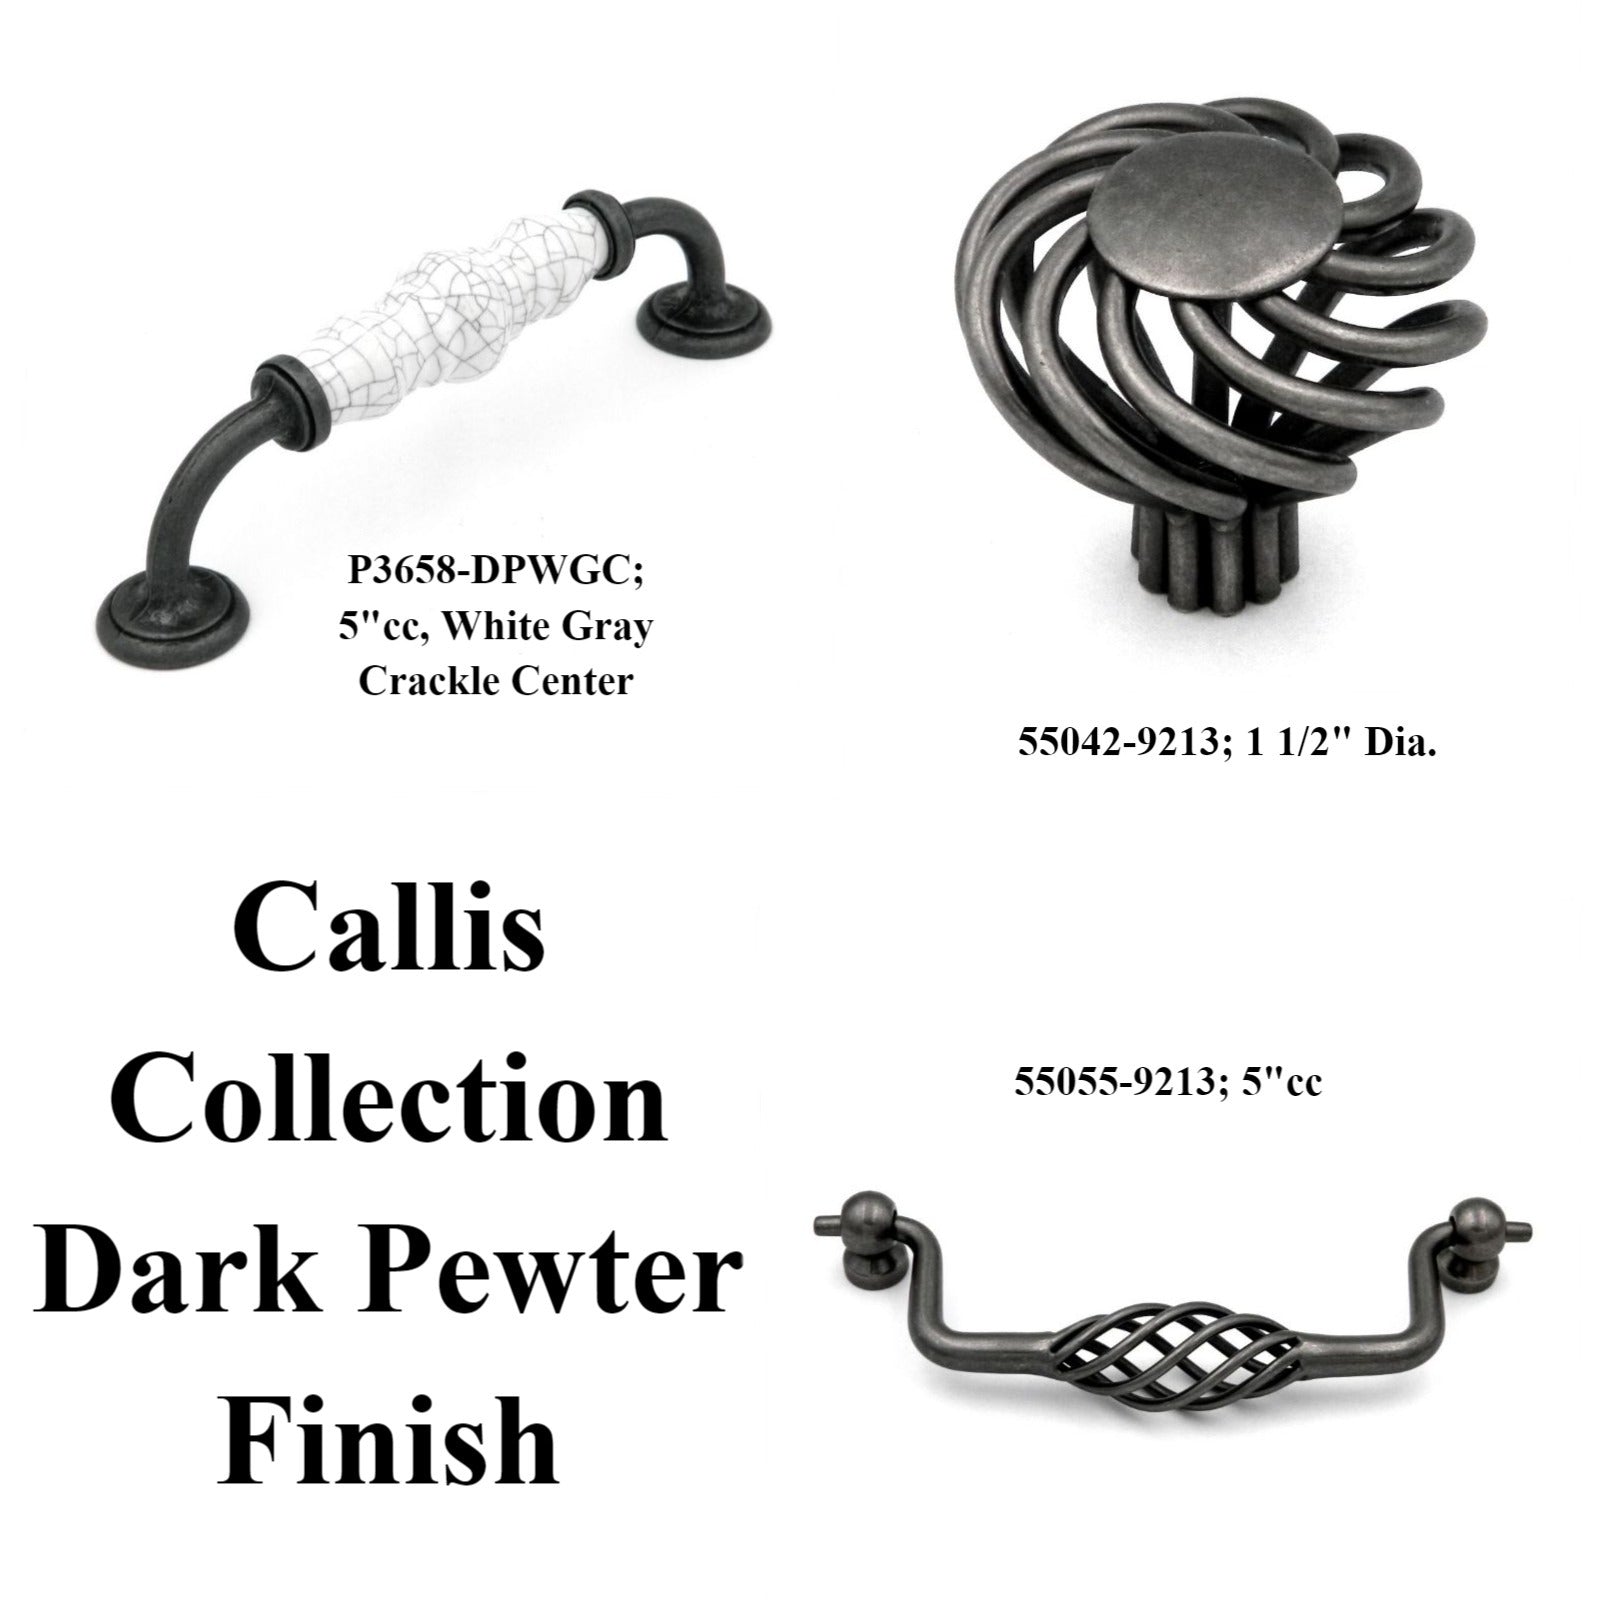 Belwith Hickory Hardware Callis Dark Pewter 5"cc Swing Bail Pull Handle P3657-DP